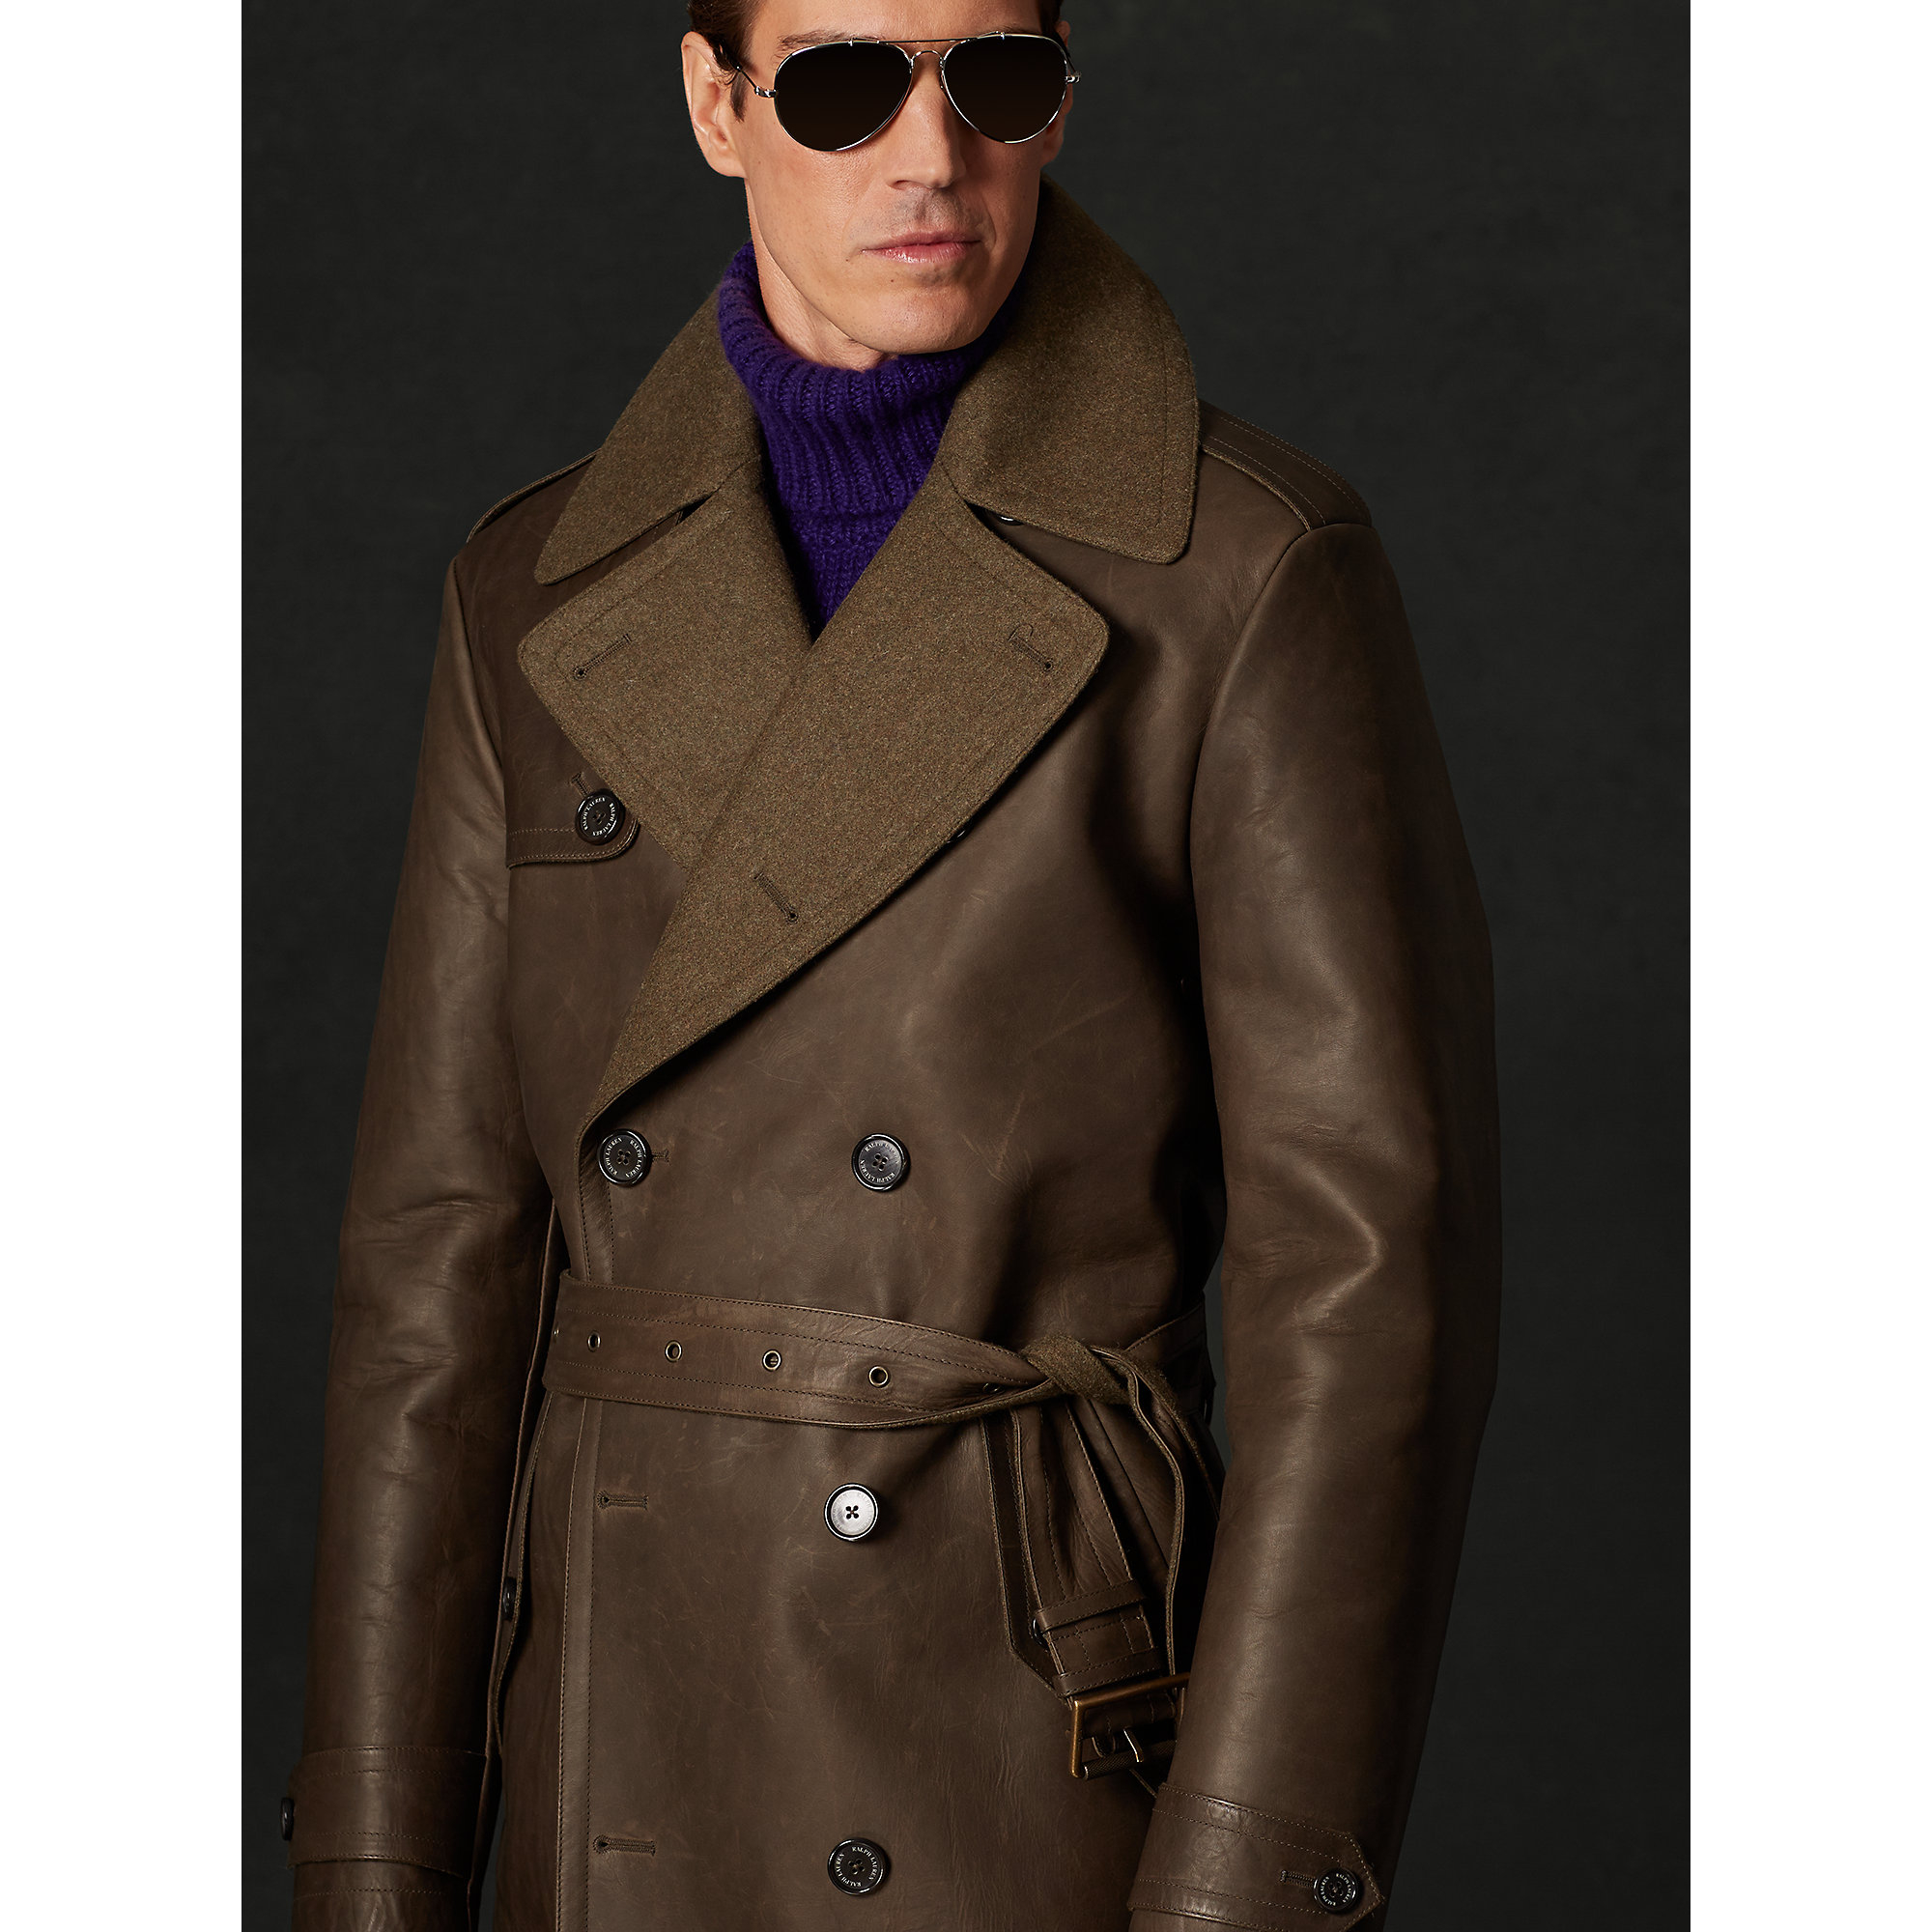 Lyst - Ralph Lauren Purple Label Leather Fairfax Trench Coat in Brown ...